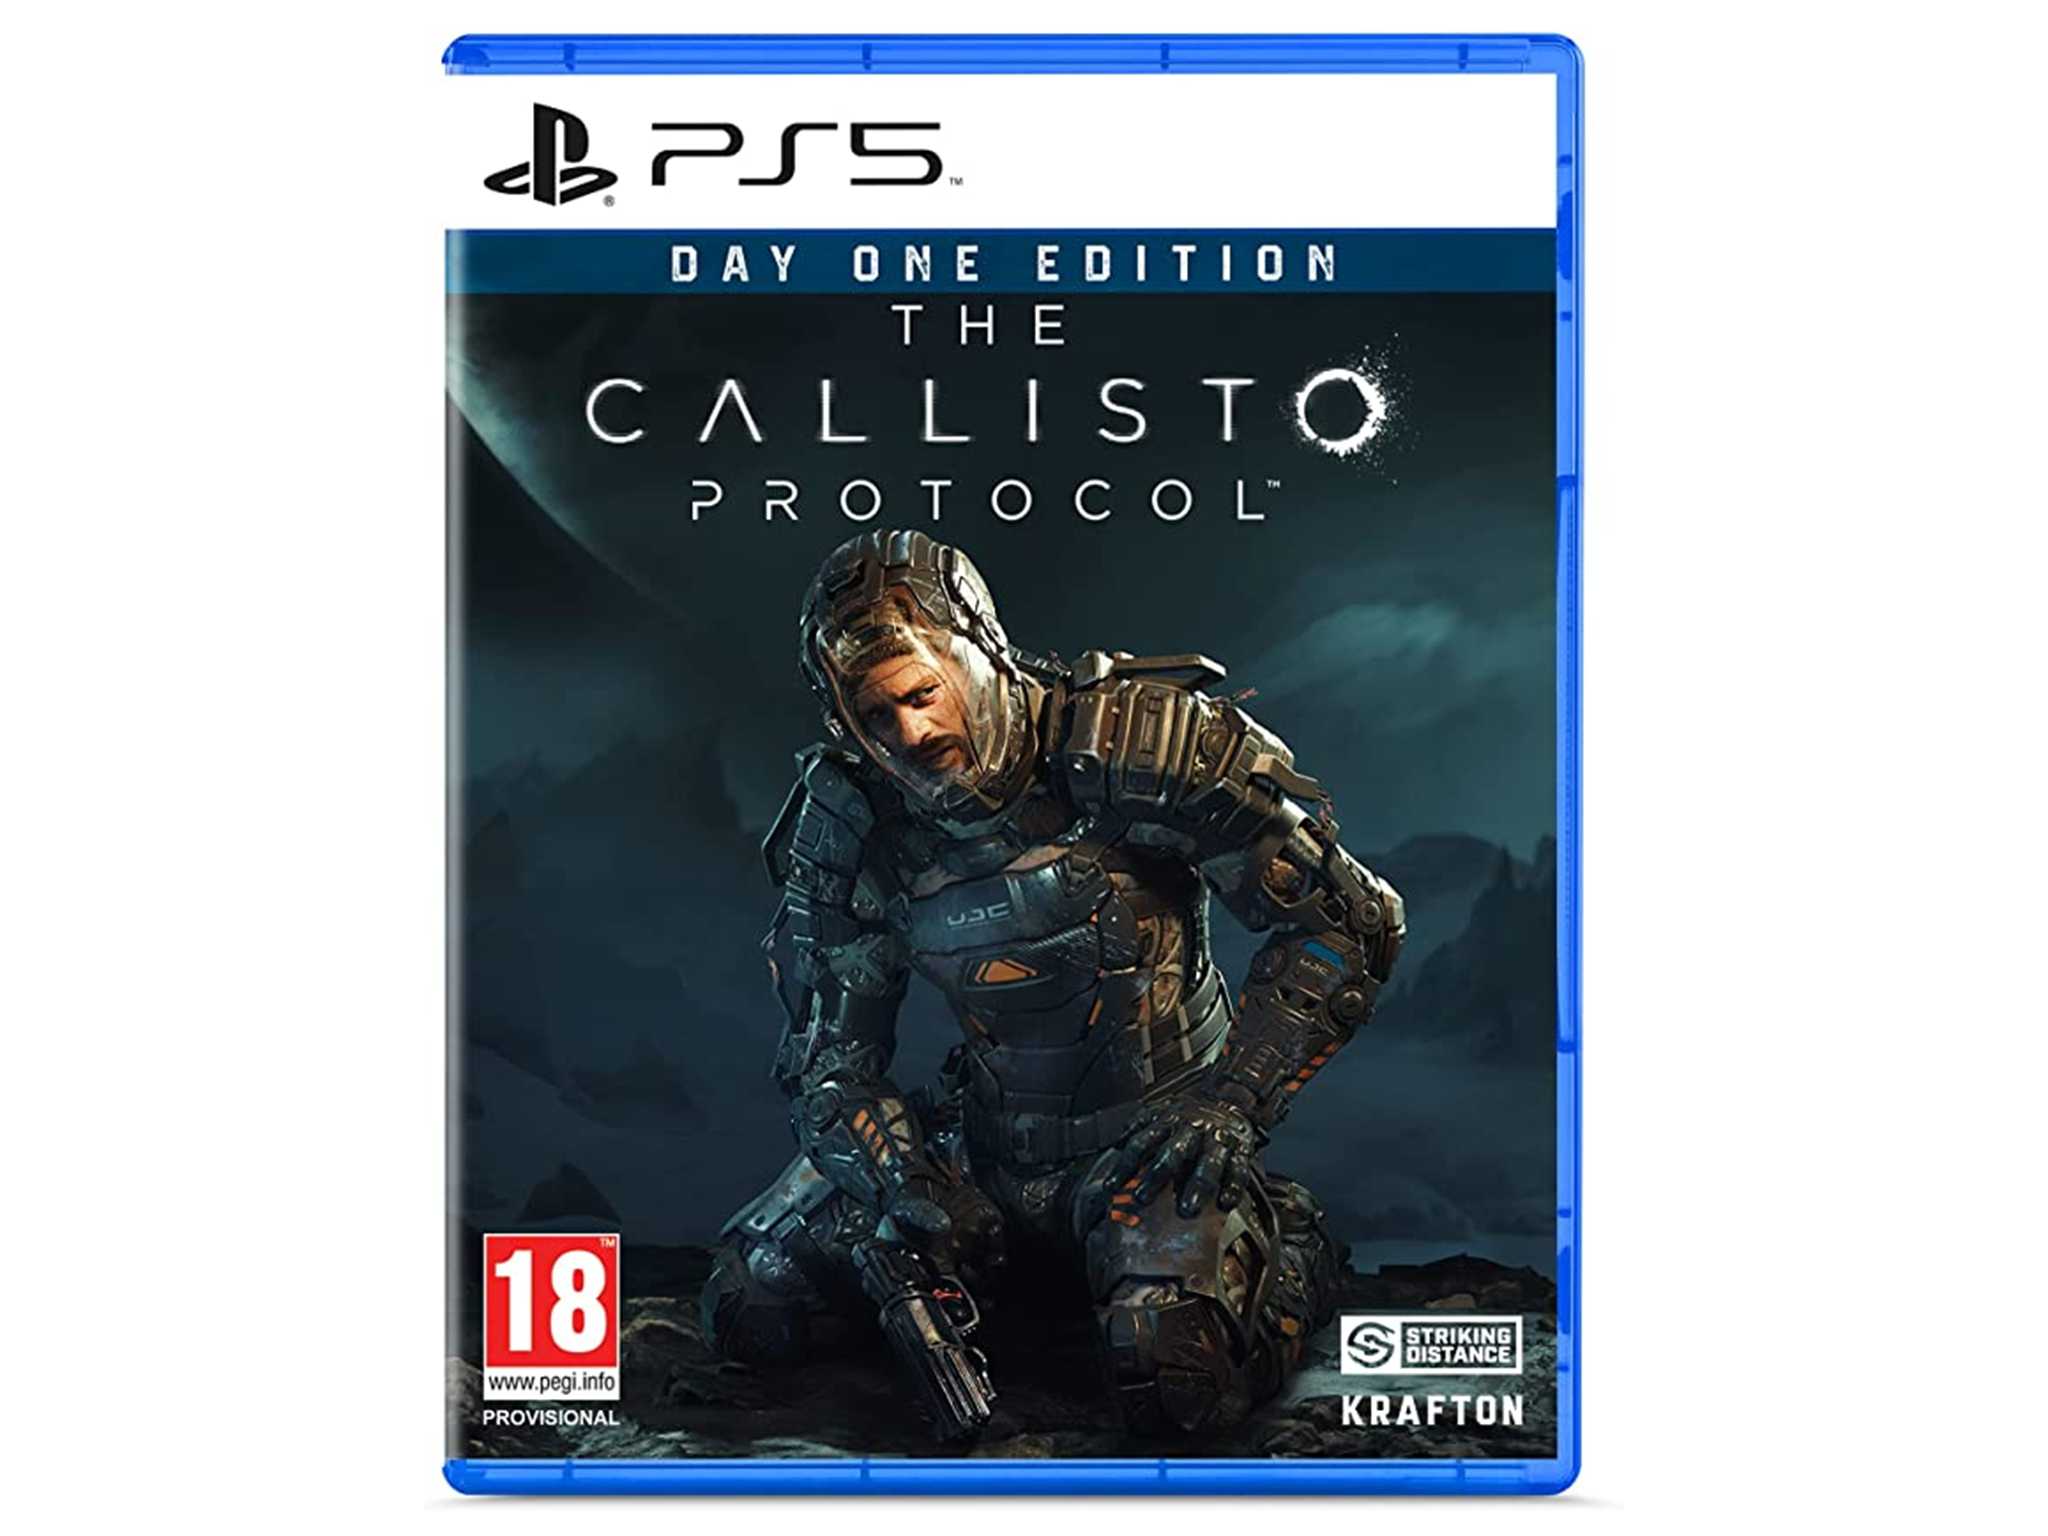 The Callisto Protocol: Pre-order on PS5, Xbox series X/S and more 